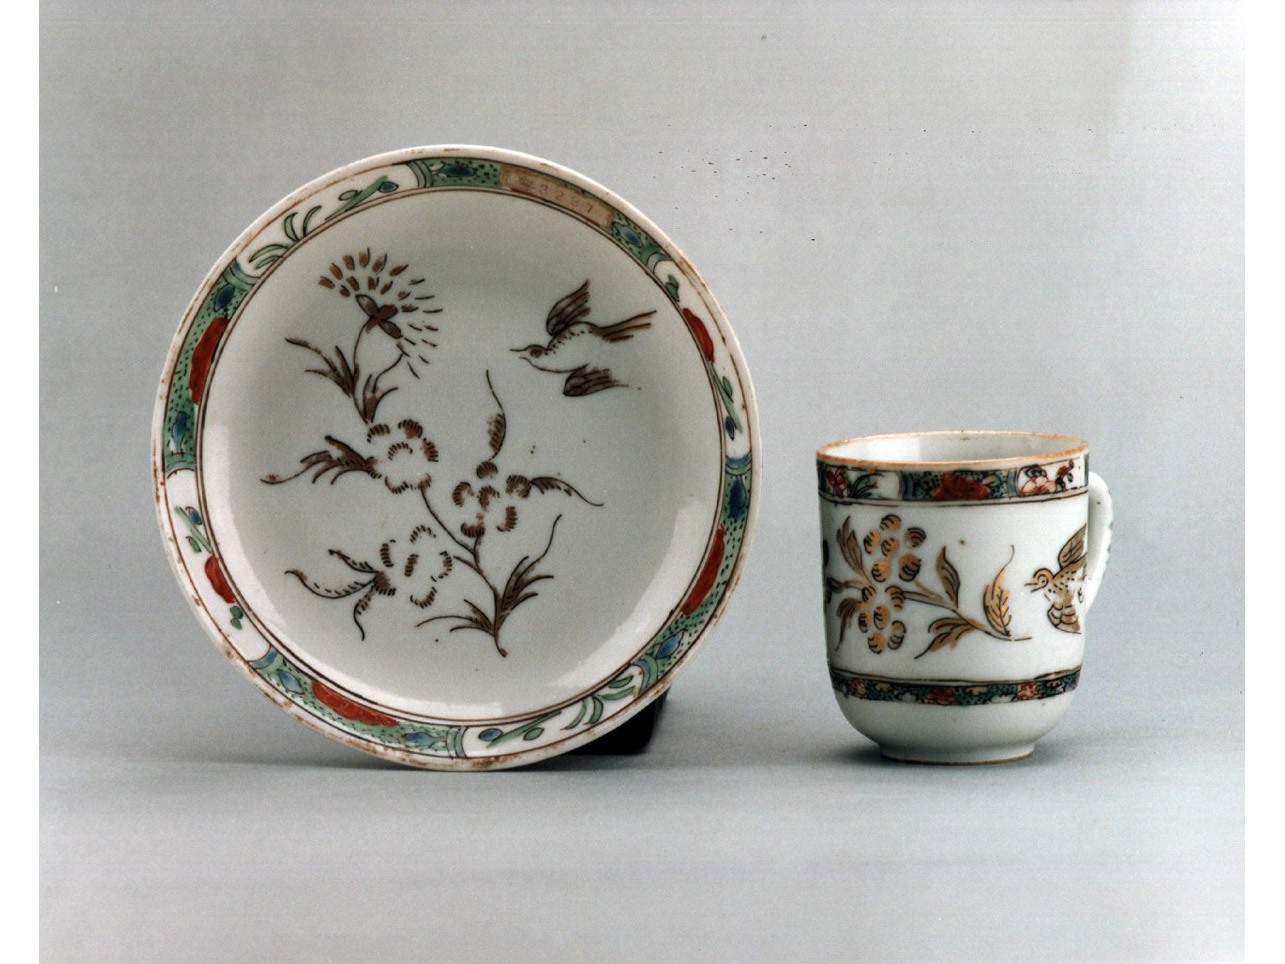 motivi decorativi vegetali e animali (piattino) - manifattura cinese (sec. XVIII)